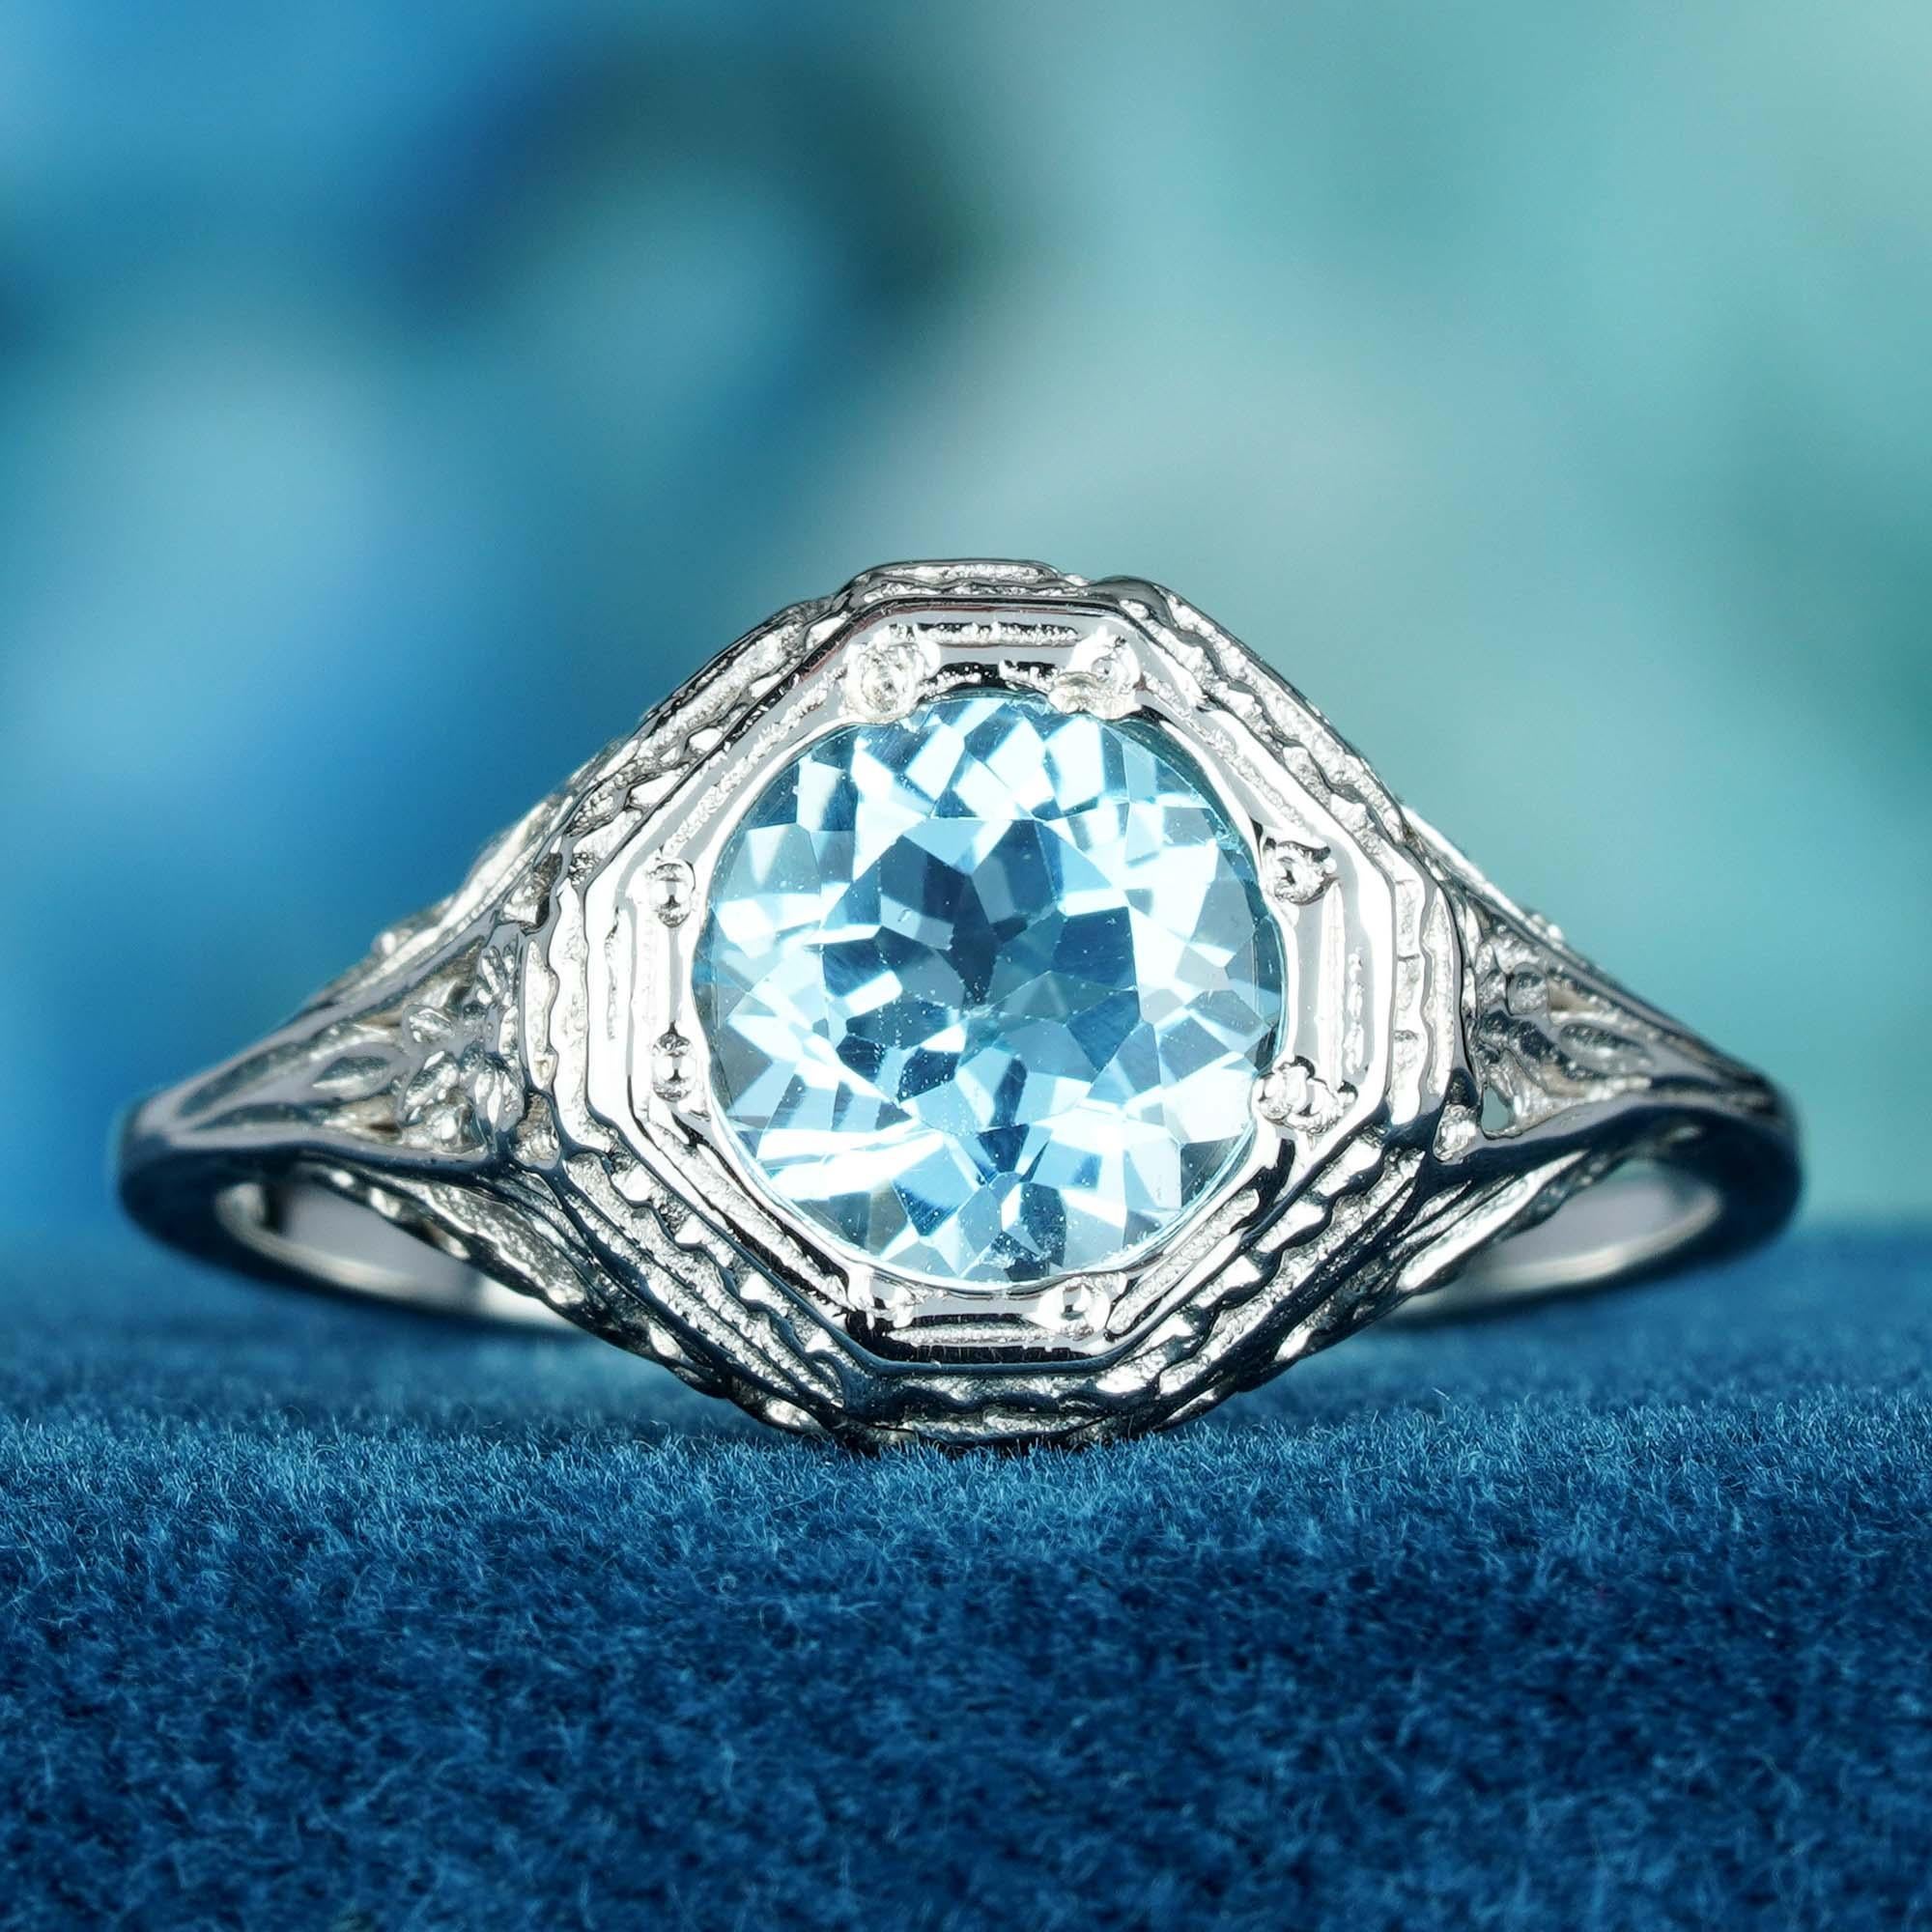 For Sale:  Natural Blue Topaz Vintage Style Filigree Ring in Solid 9K White Gold 2